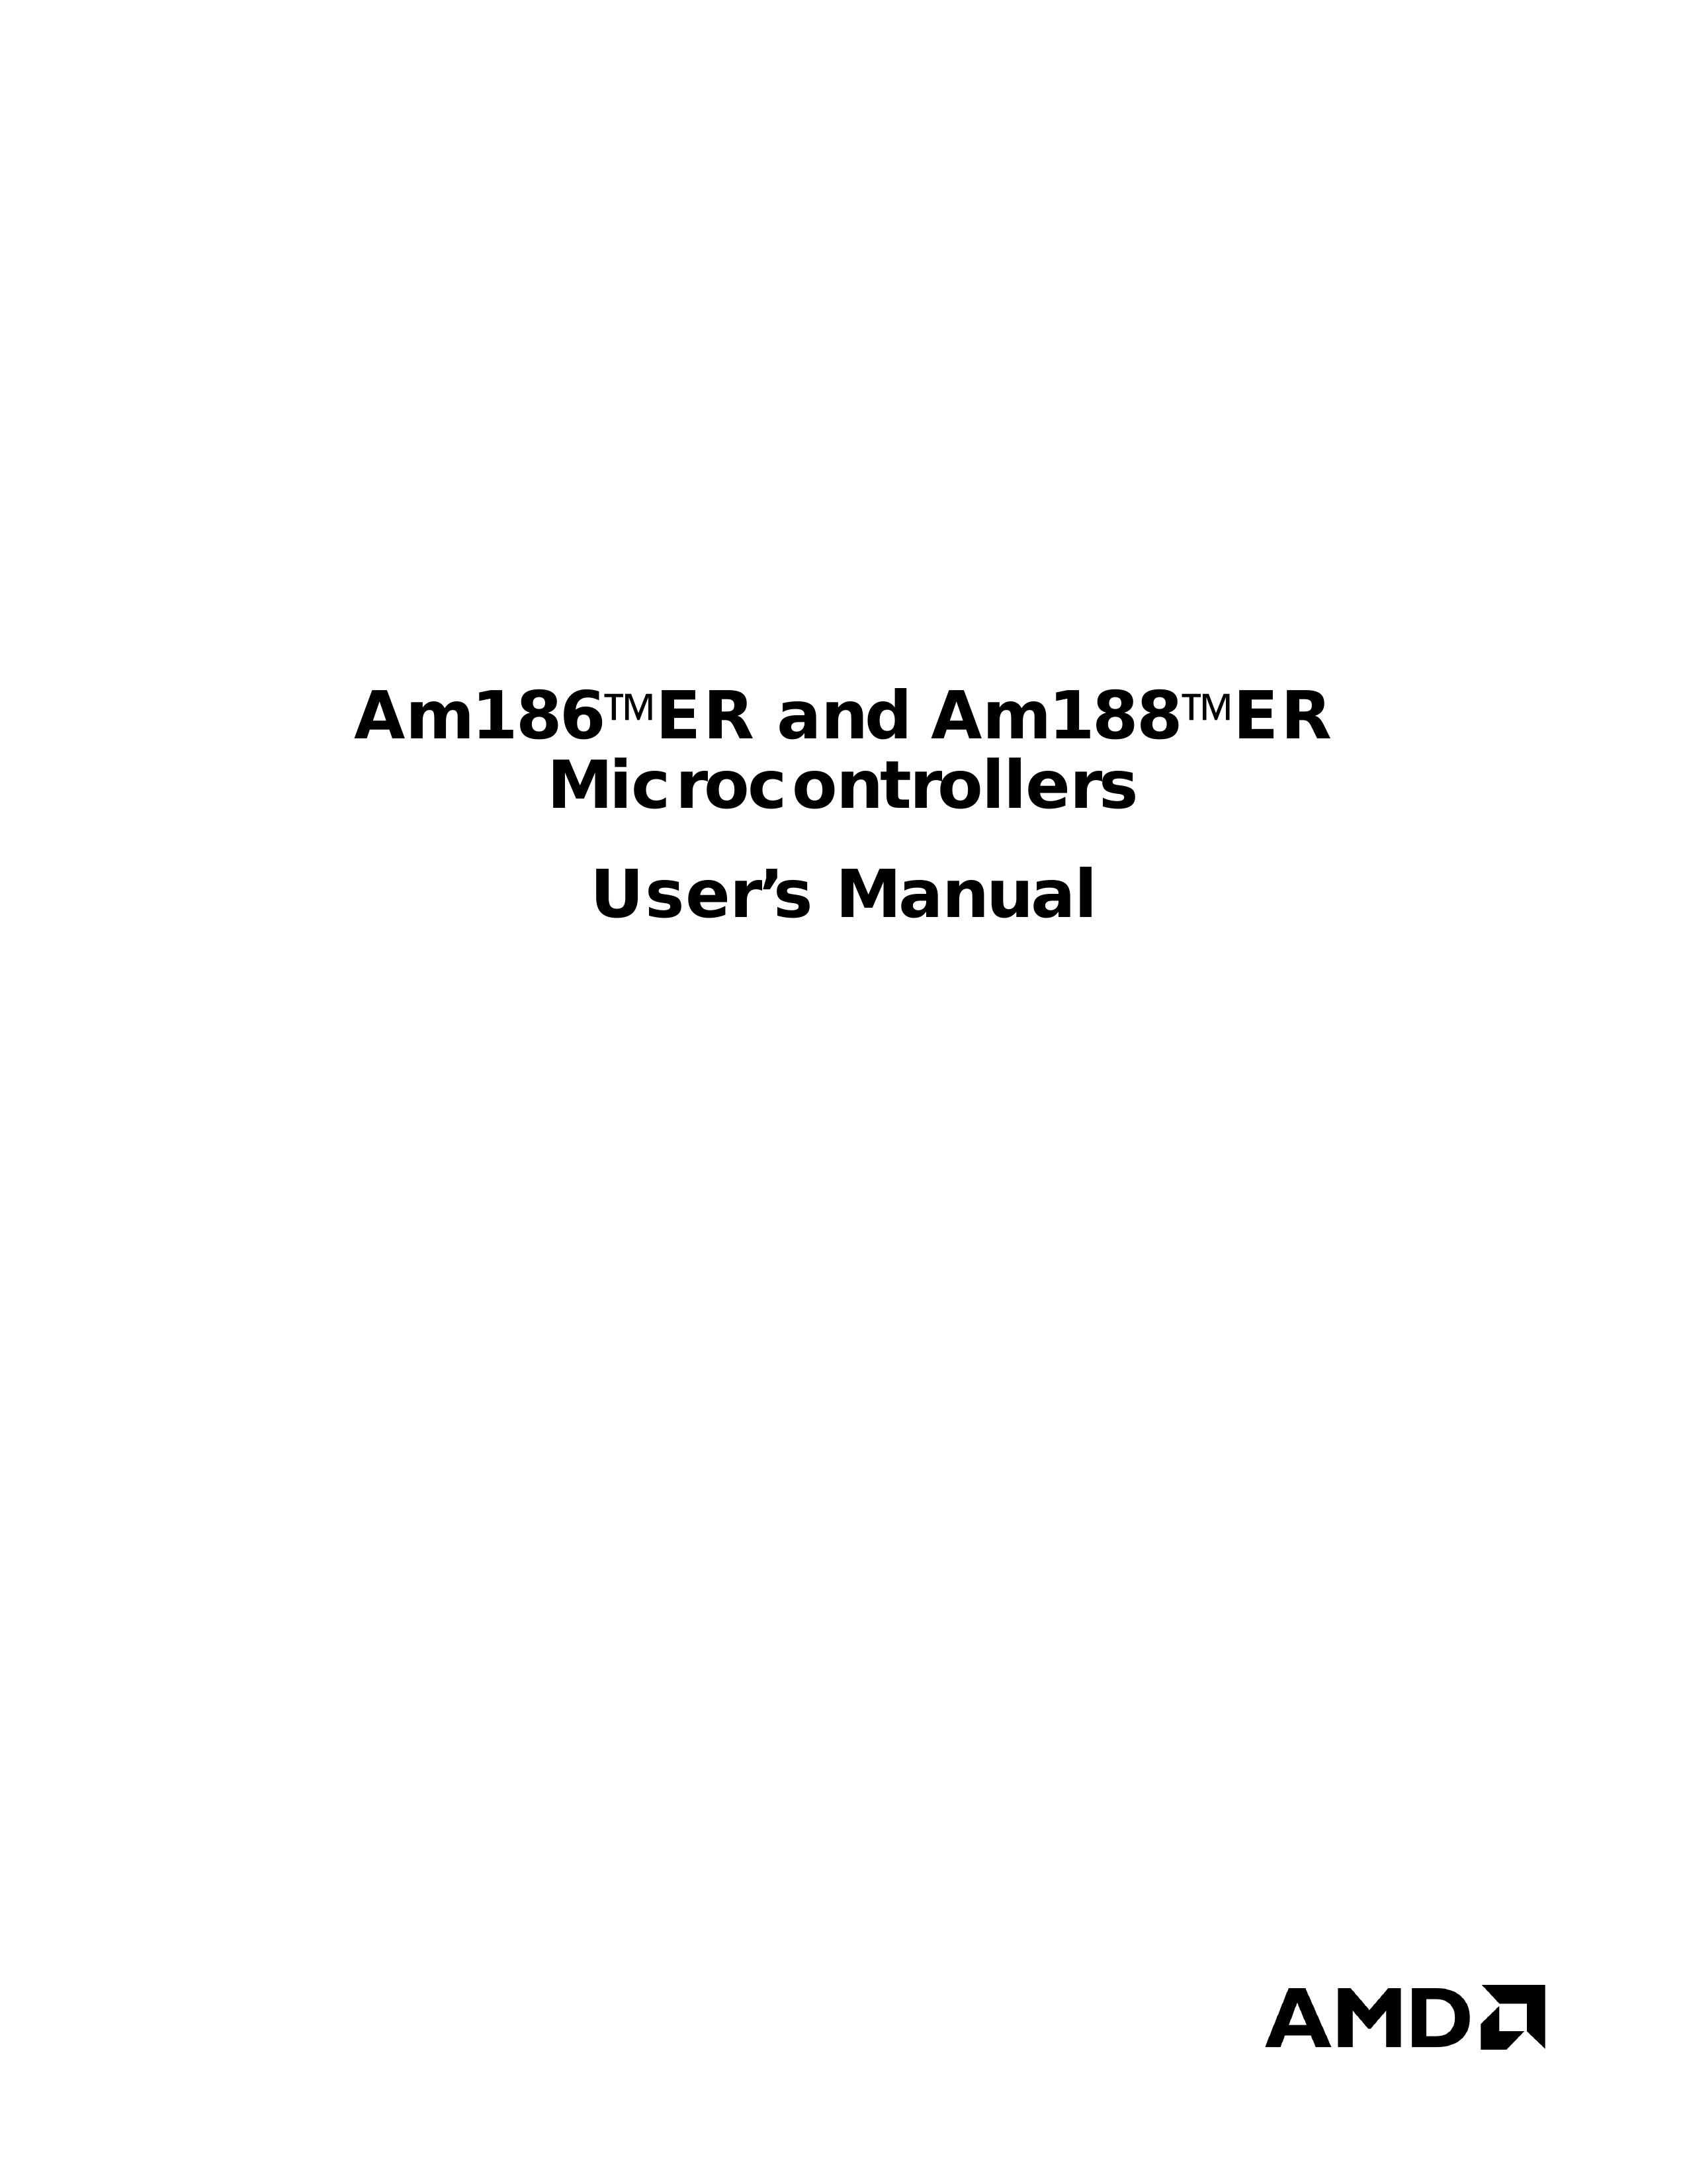 AMD Am186TMER Microscope & Magnifier User Manual